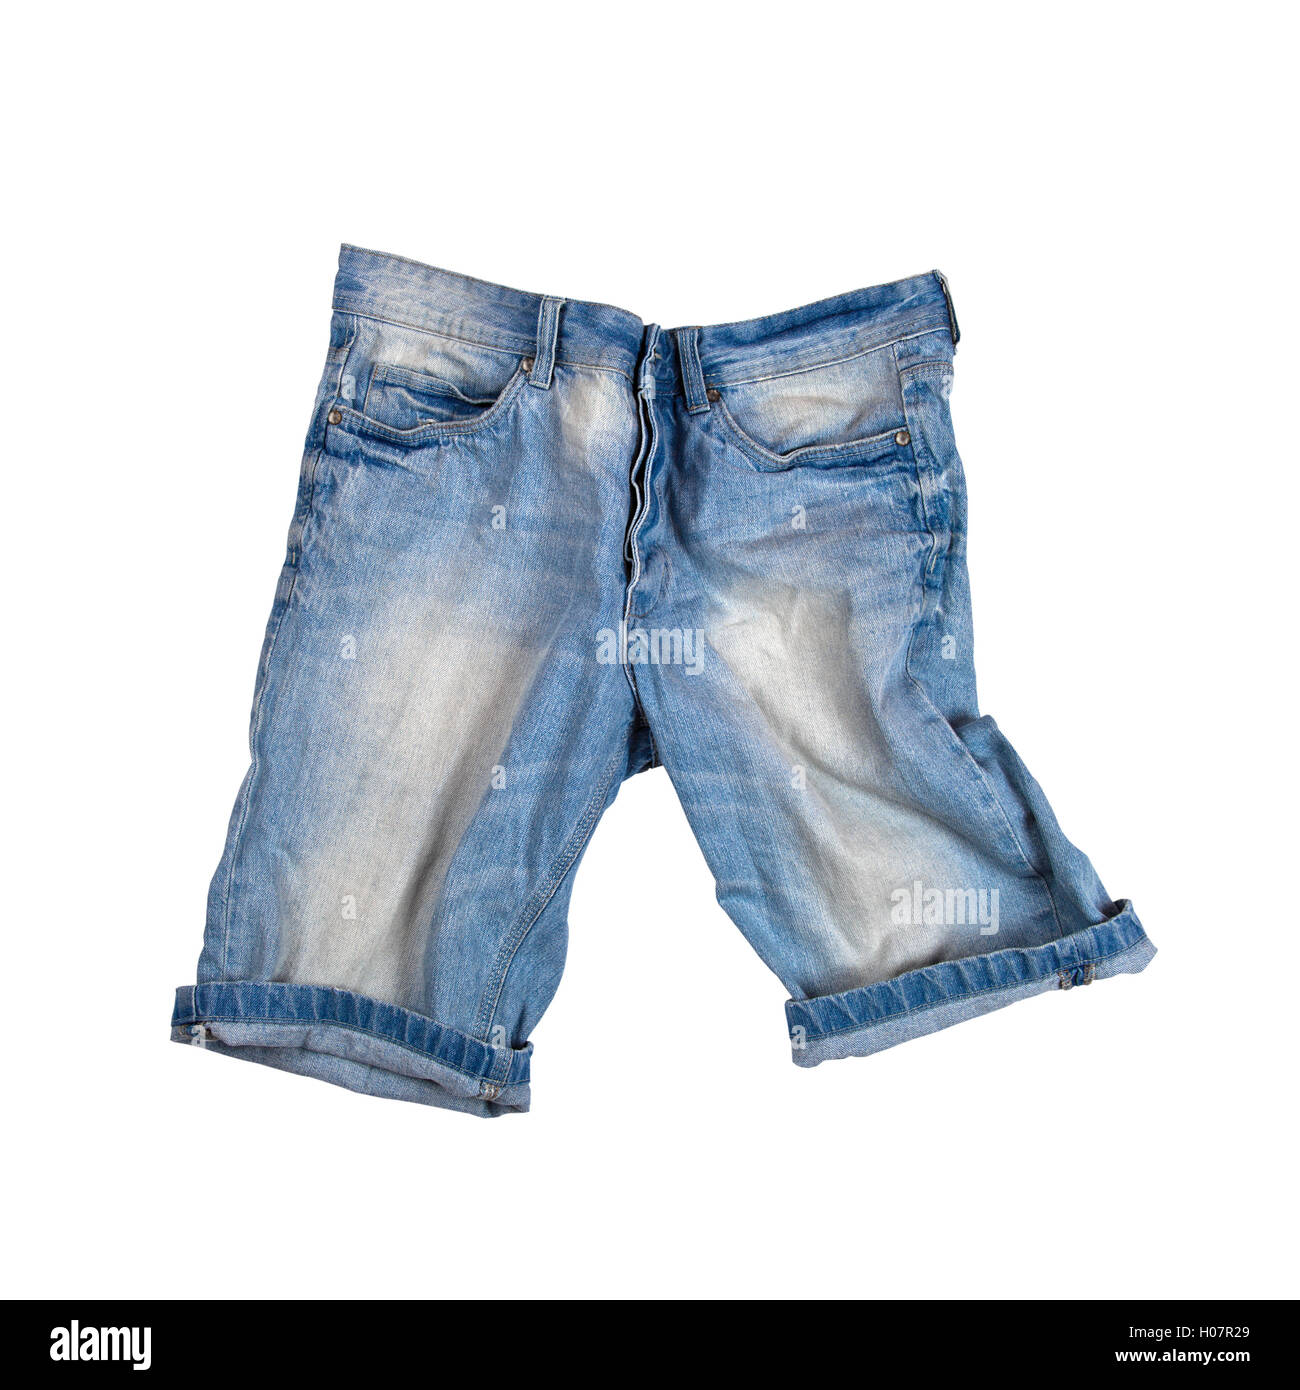 blue jeans shorts Stock Photo - Alamy